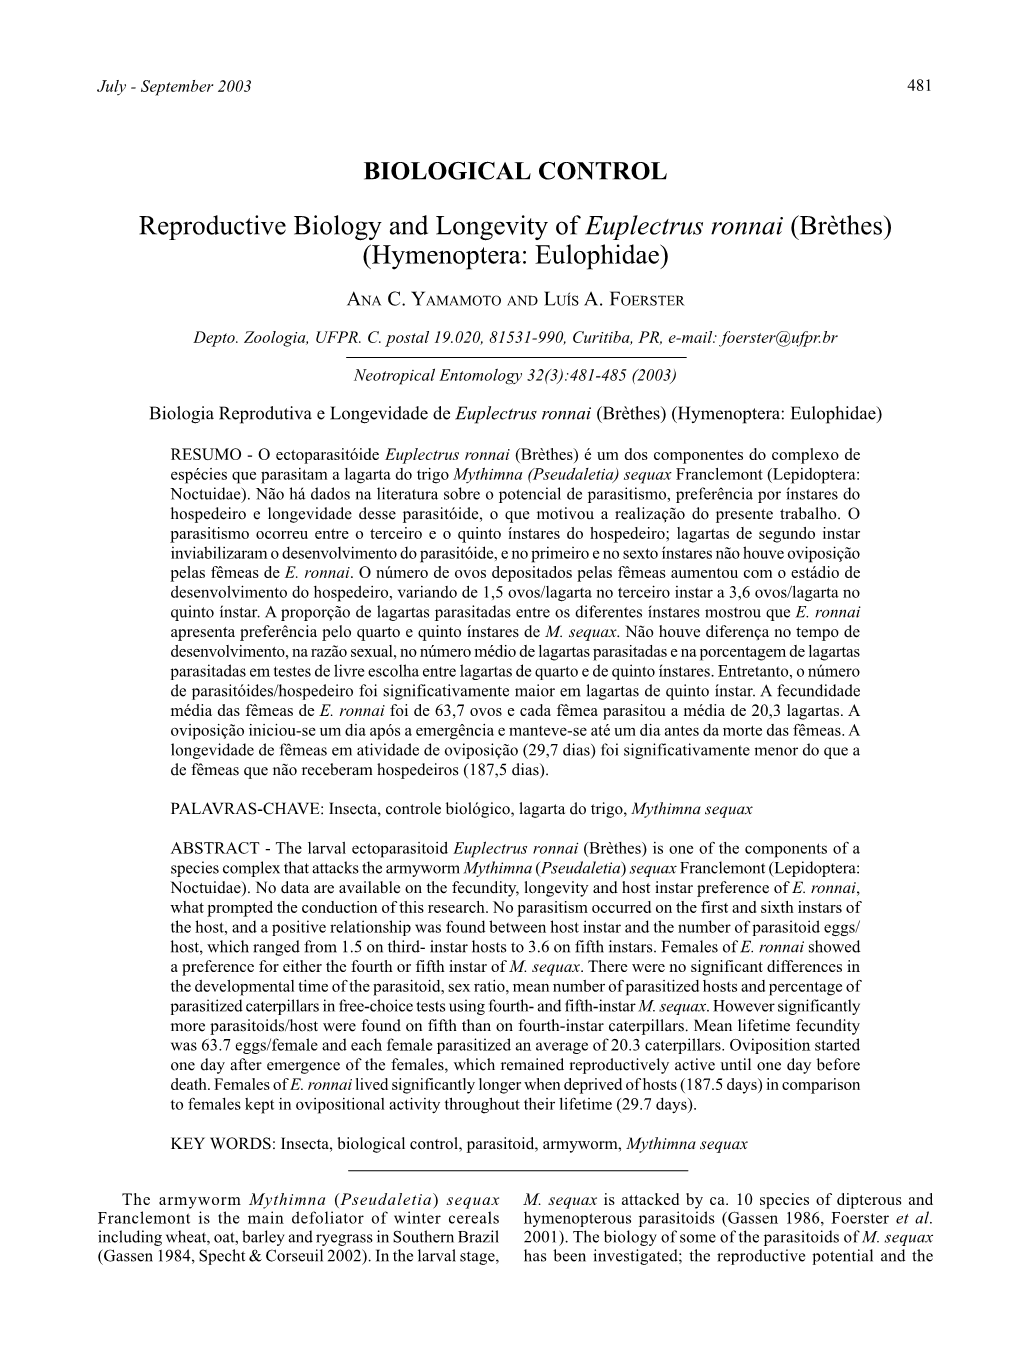 Reproductive Biology and Longevity of Euplectrus Ronnai (Brèthes) (Hymenoptera: Eulophidae)